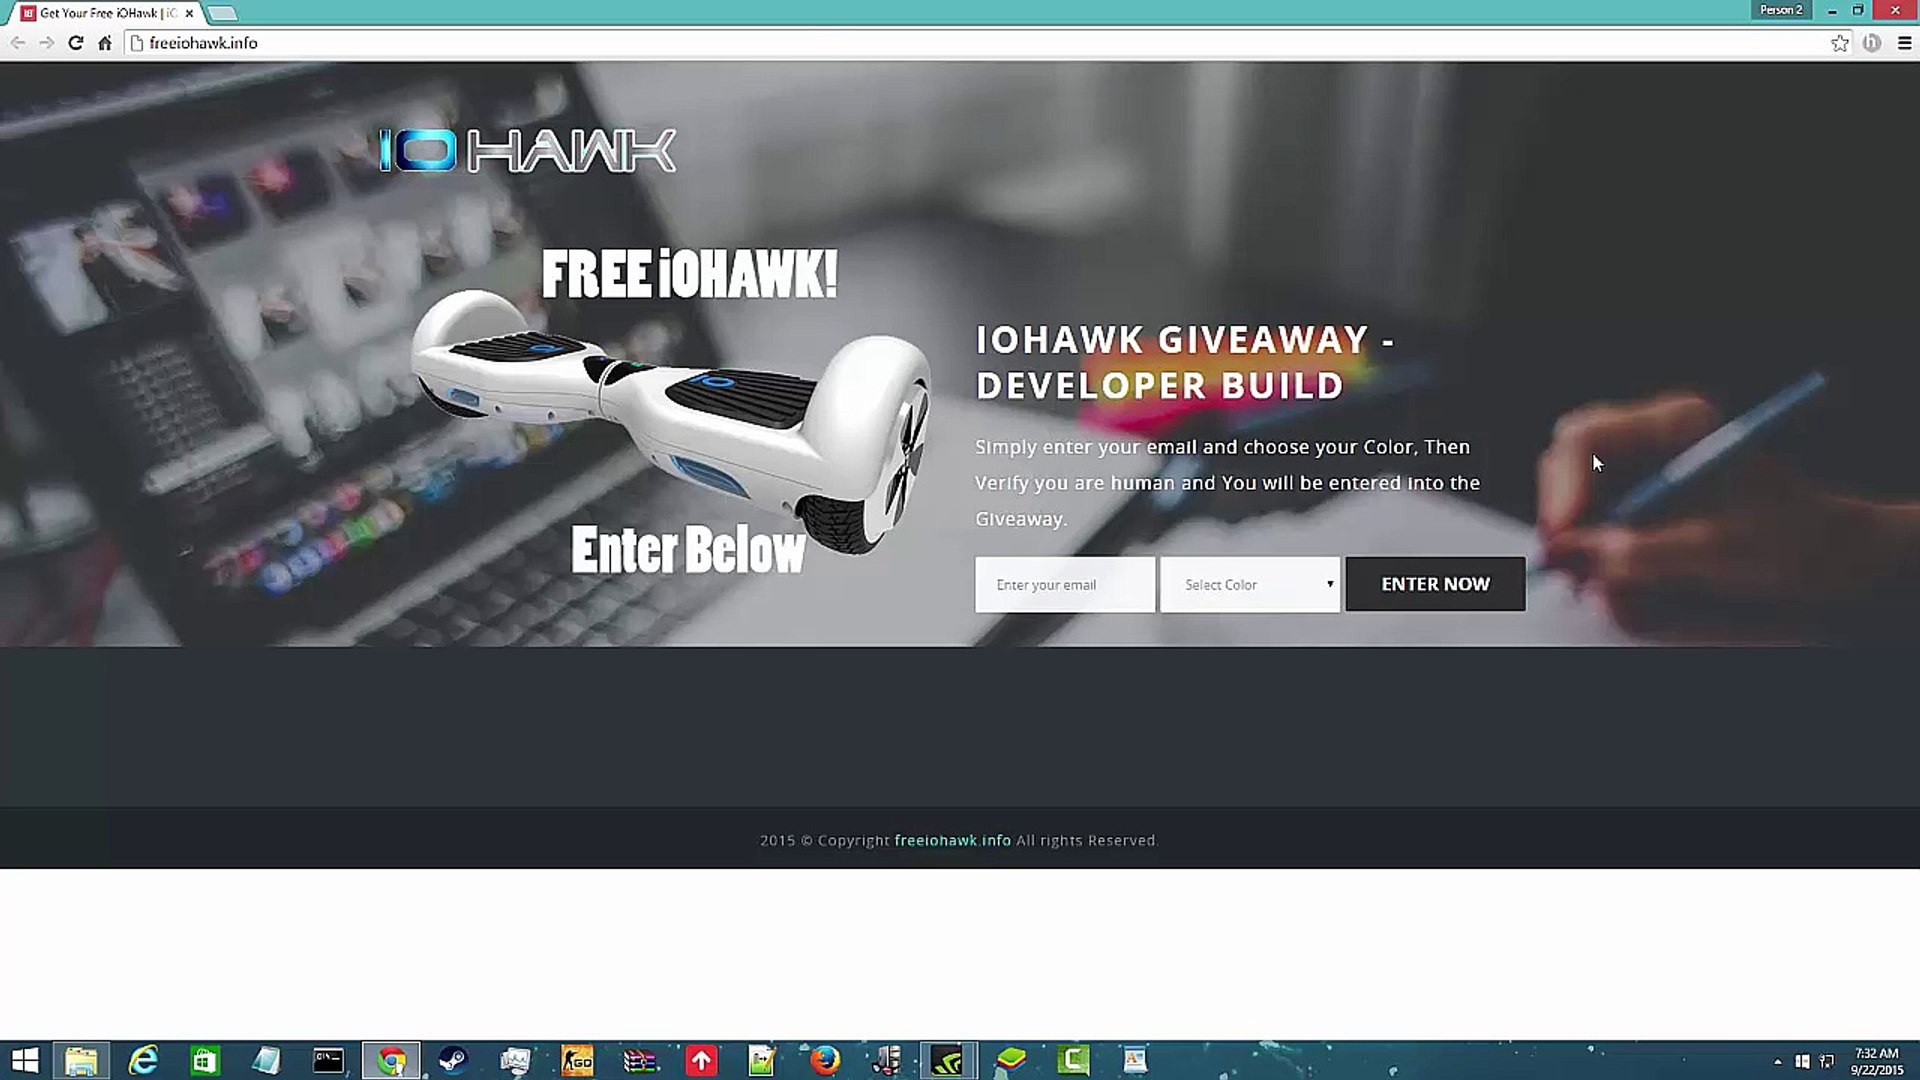 Win IO Hawk | FreeIOHawk.info | IO Hawk Giveaway 2015